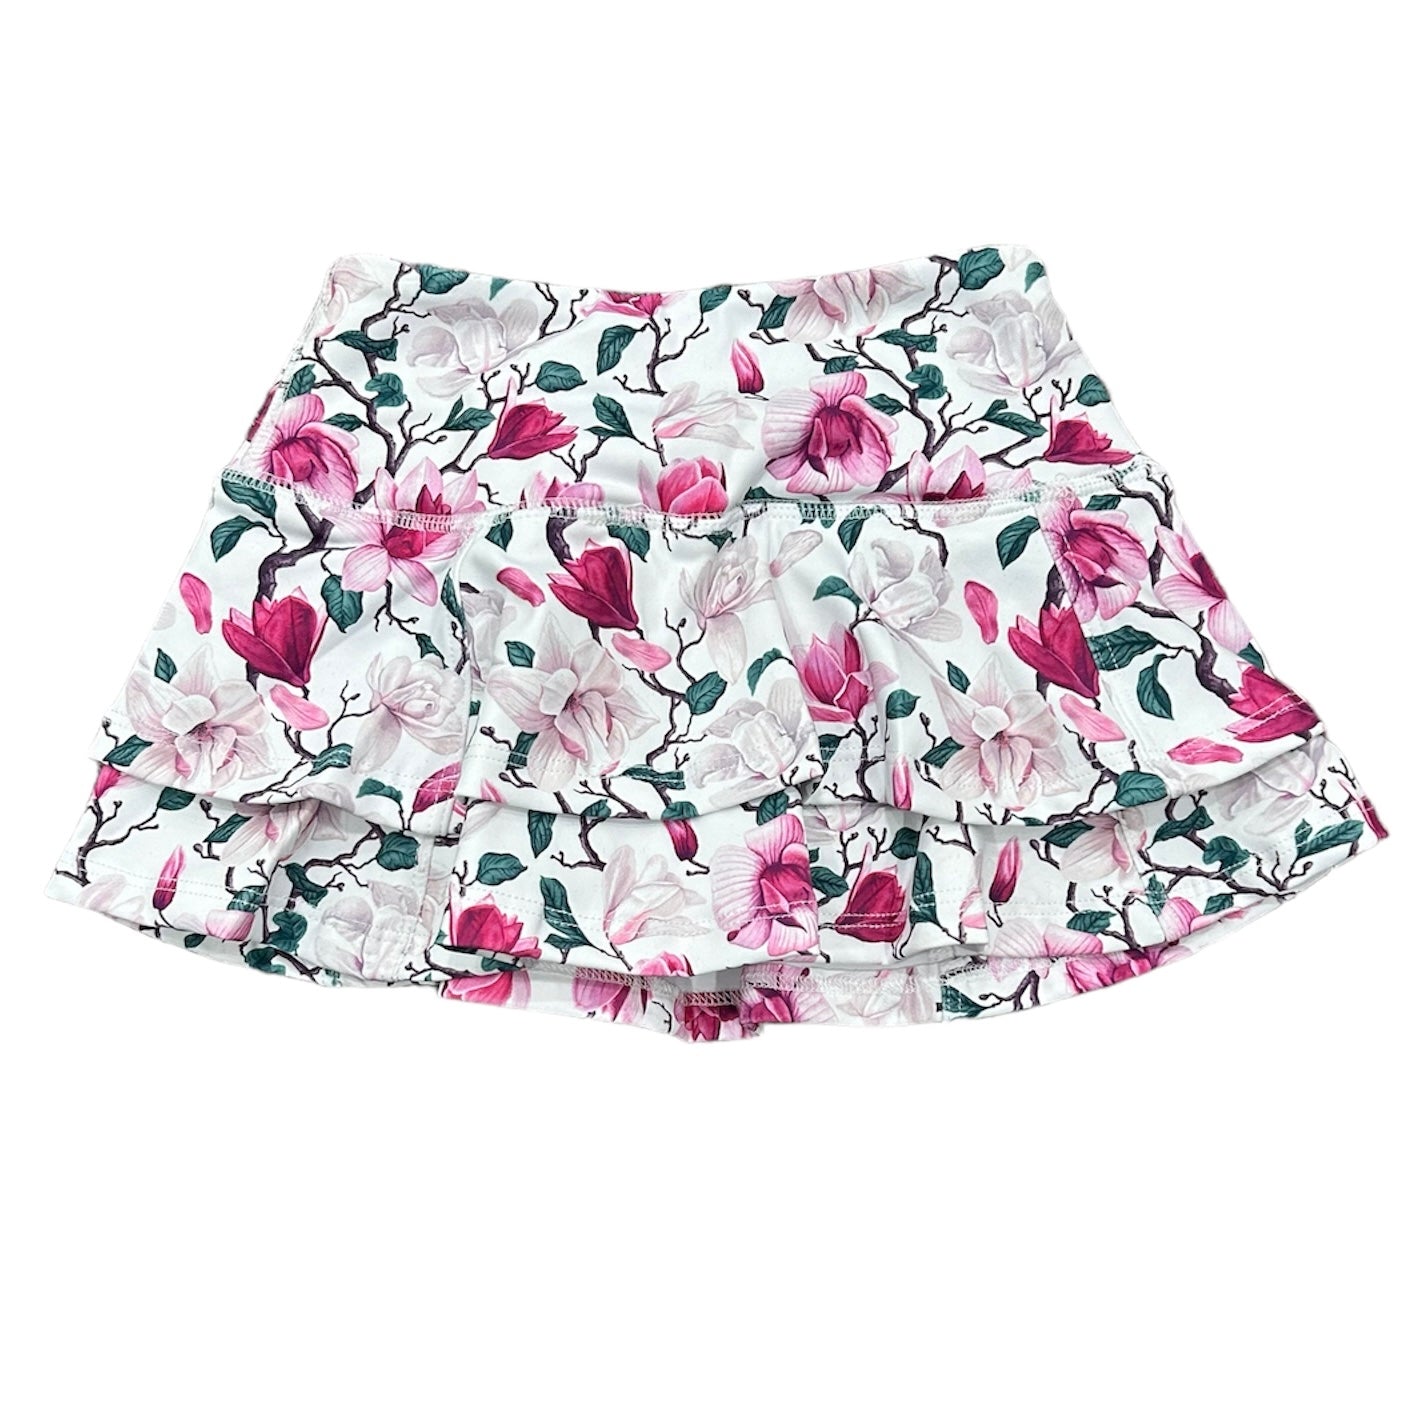 Tennis Skirt - Magenta Floral